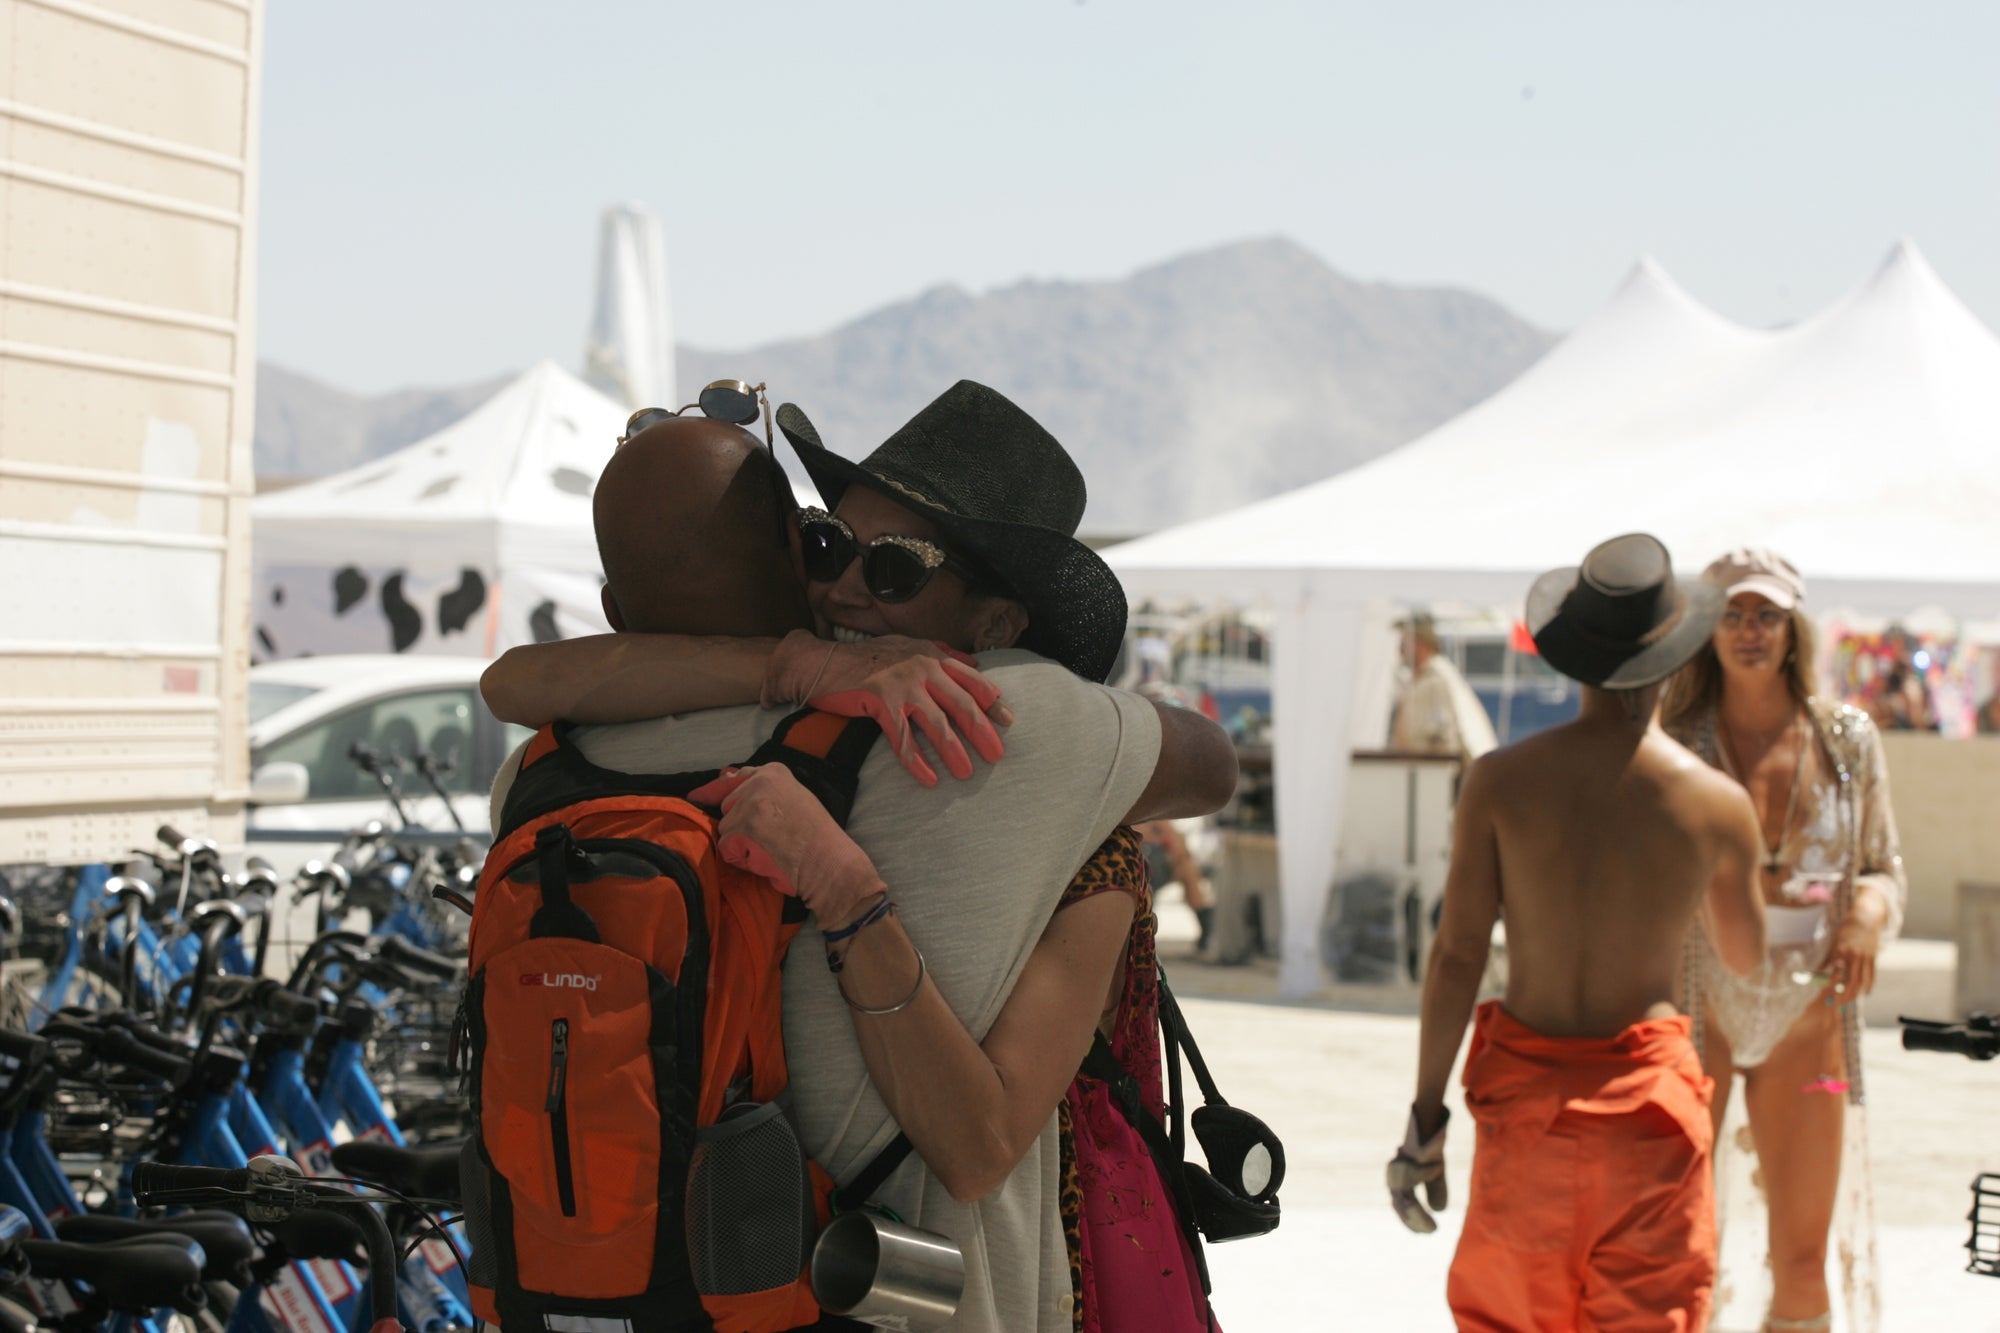 The Best of Burning Man